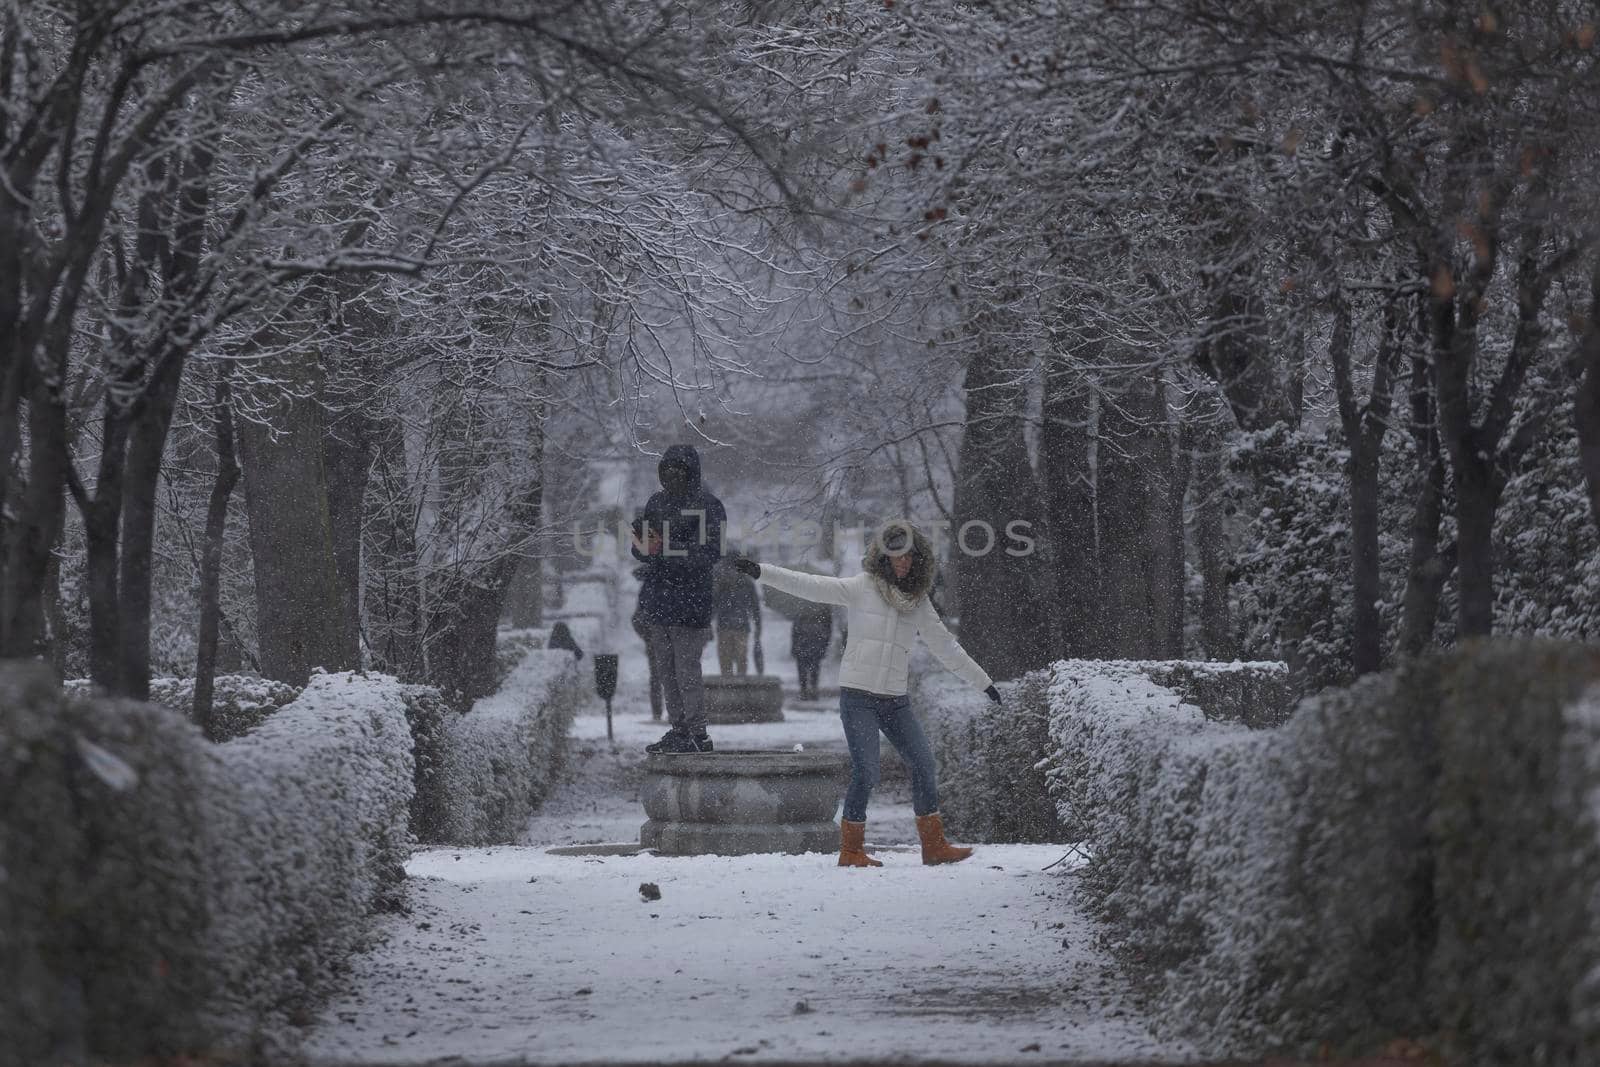 People enjoying a snowy day in the Retiro park, Madrid. by alvarobueno